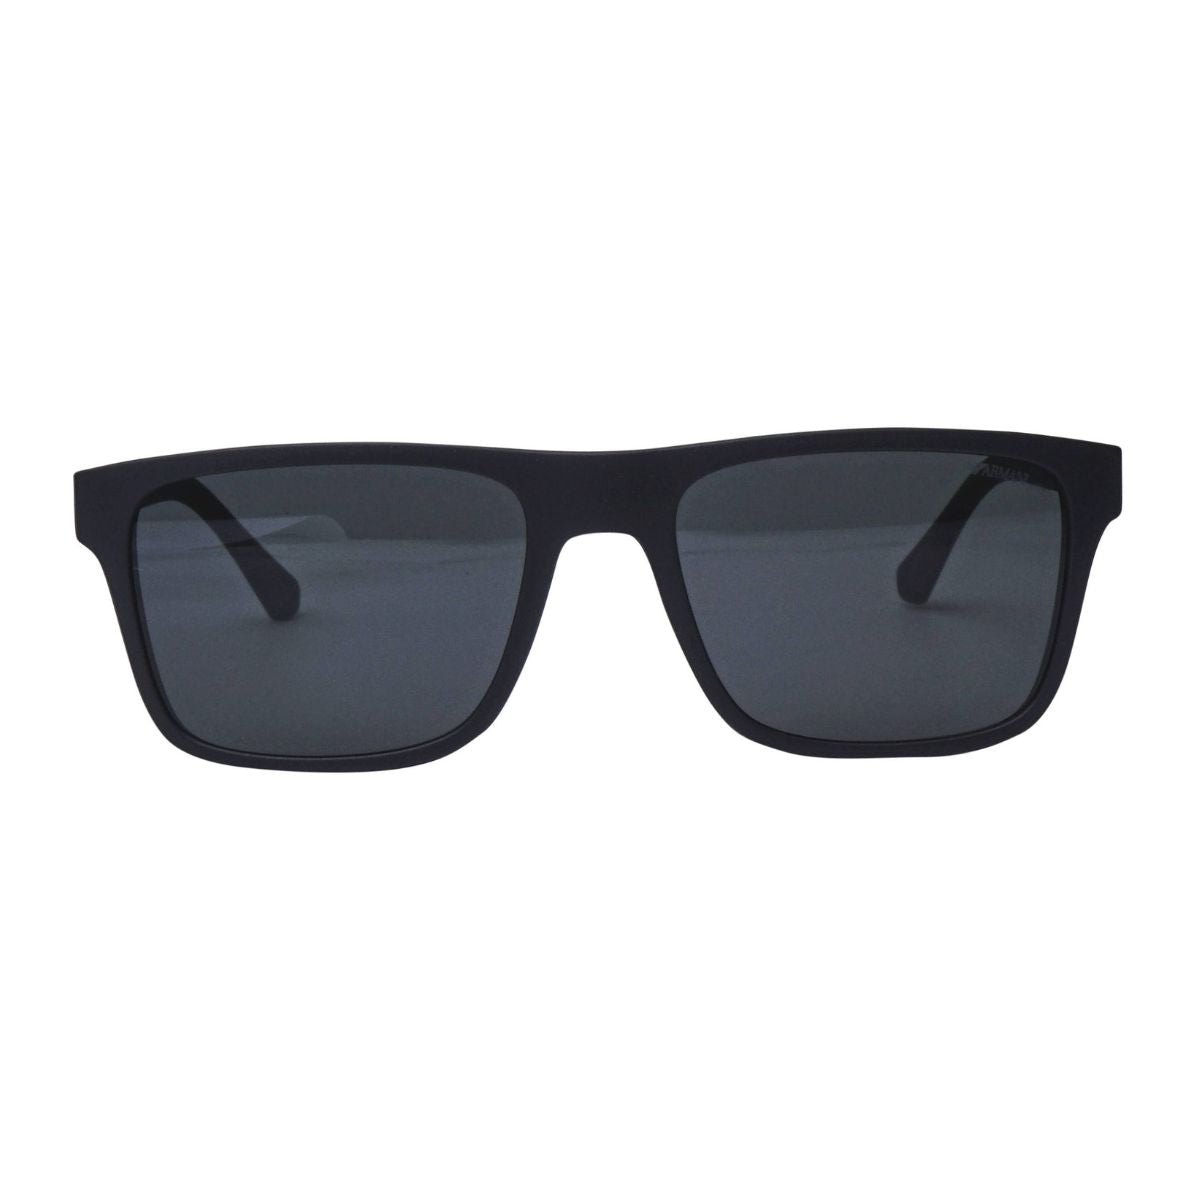 "Buy Emporio Armani EA 4115 5853/1W Clip-On Eyewear Sunglass For Men's At Optorium"